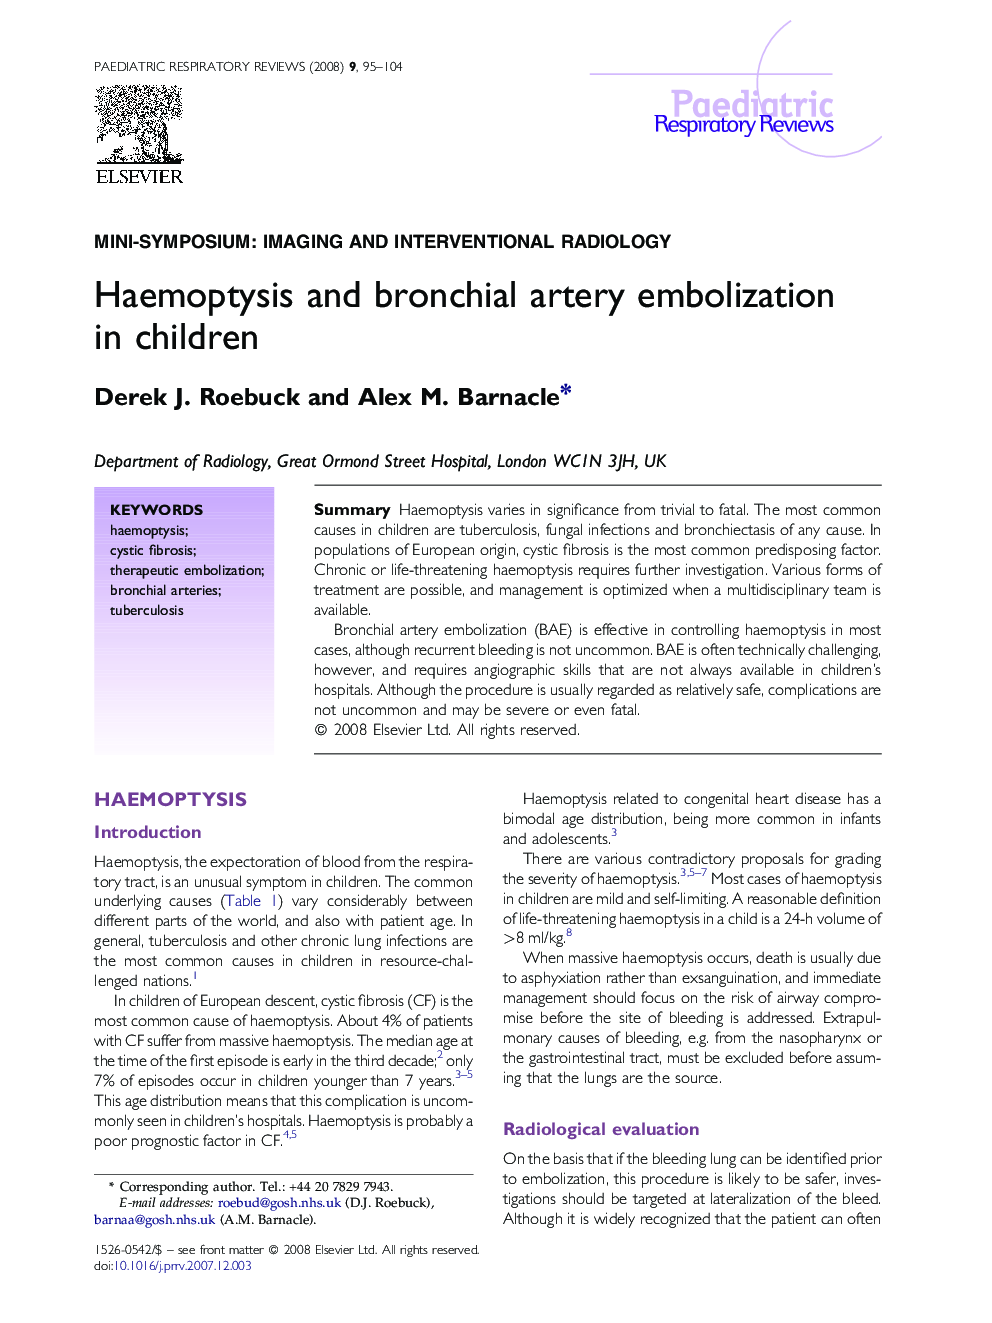 Haemoptysis and bronchial artery embolization in children